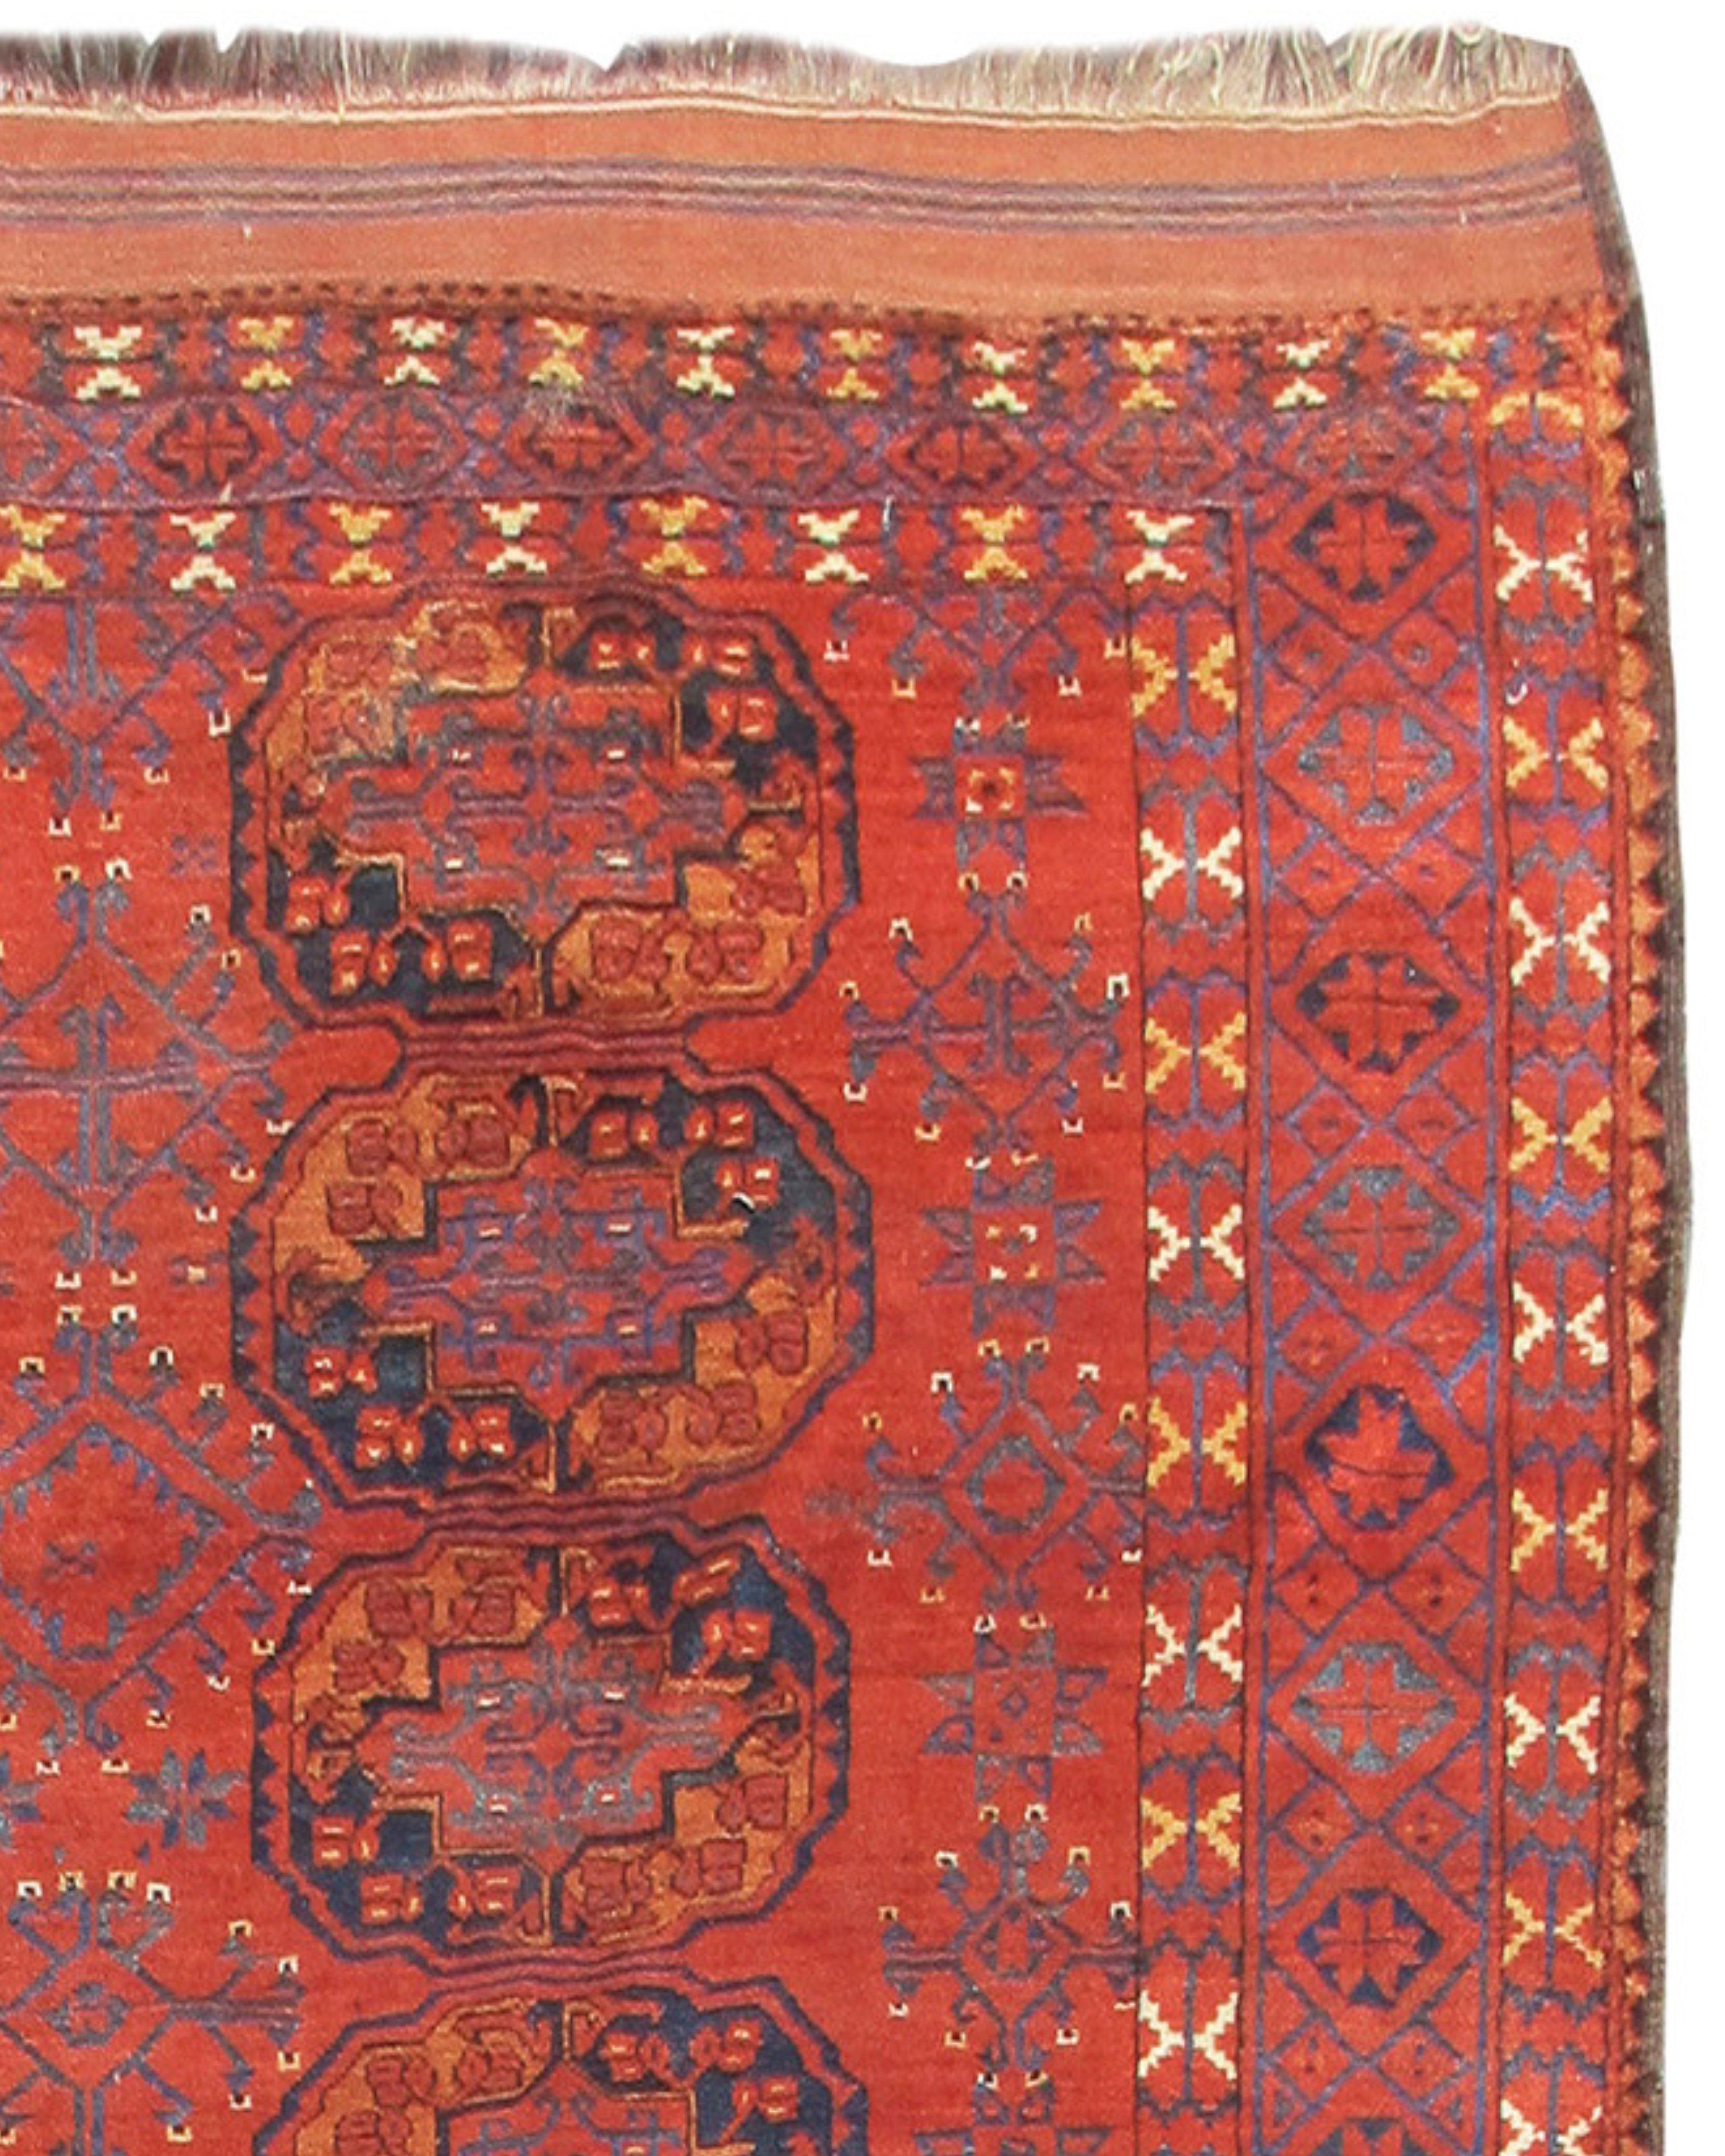 Ersari Main Carpet, 19th century

Additional Information:
Dimensions: 7'8